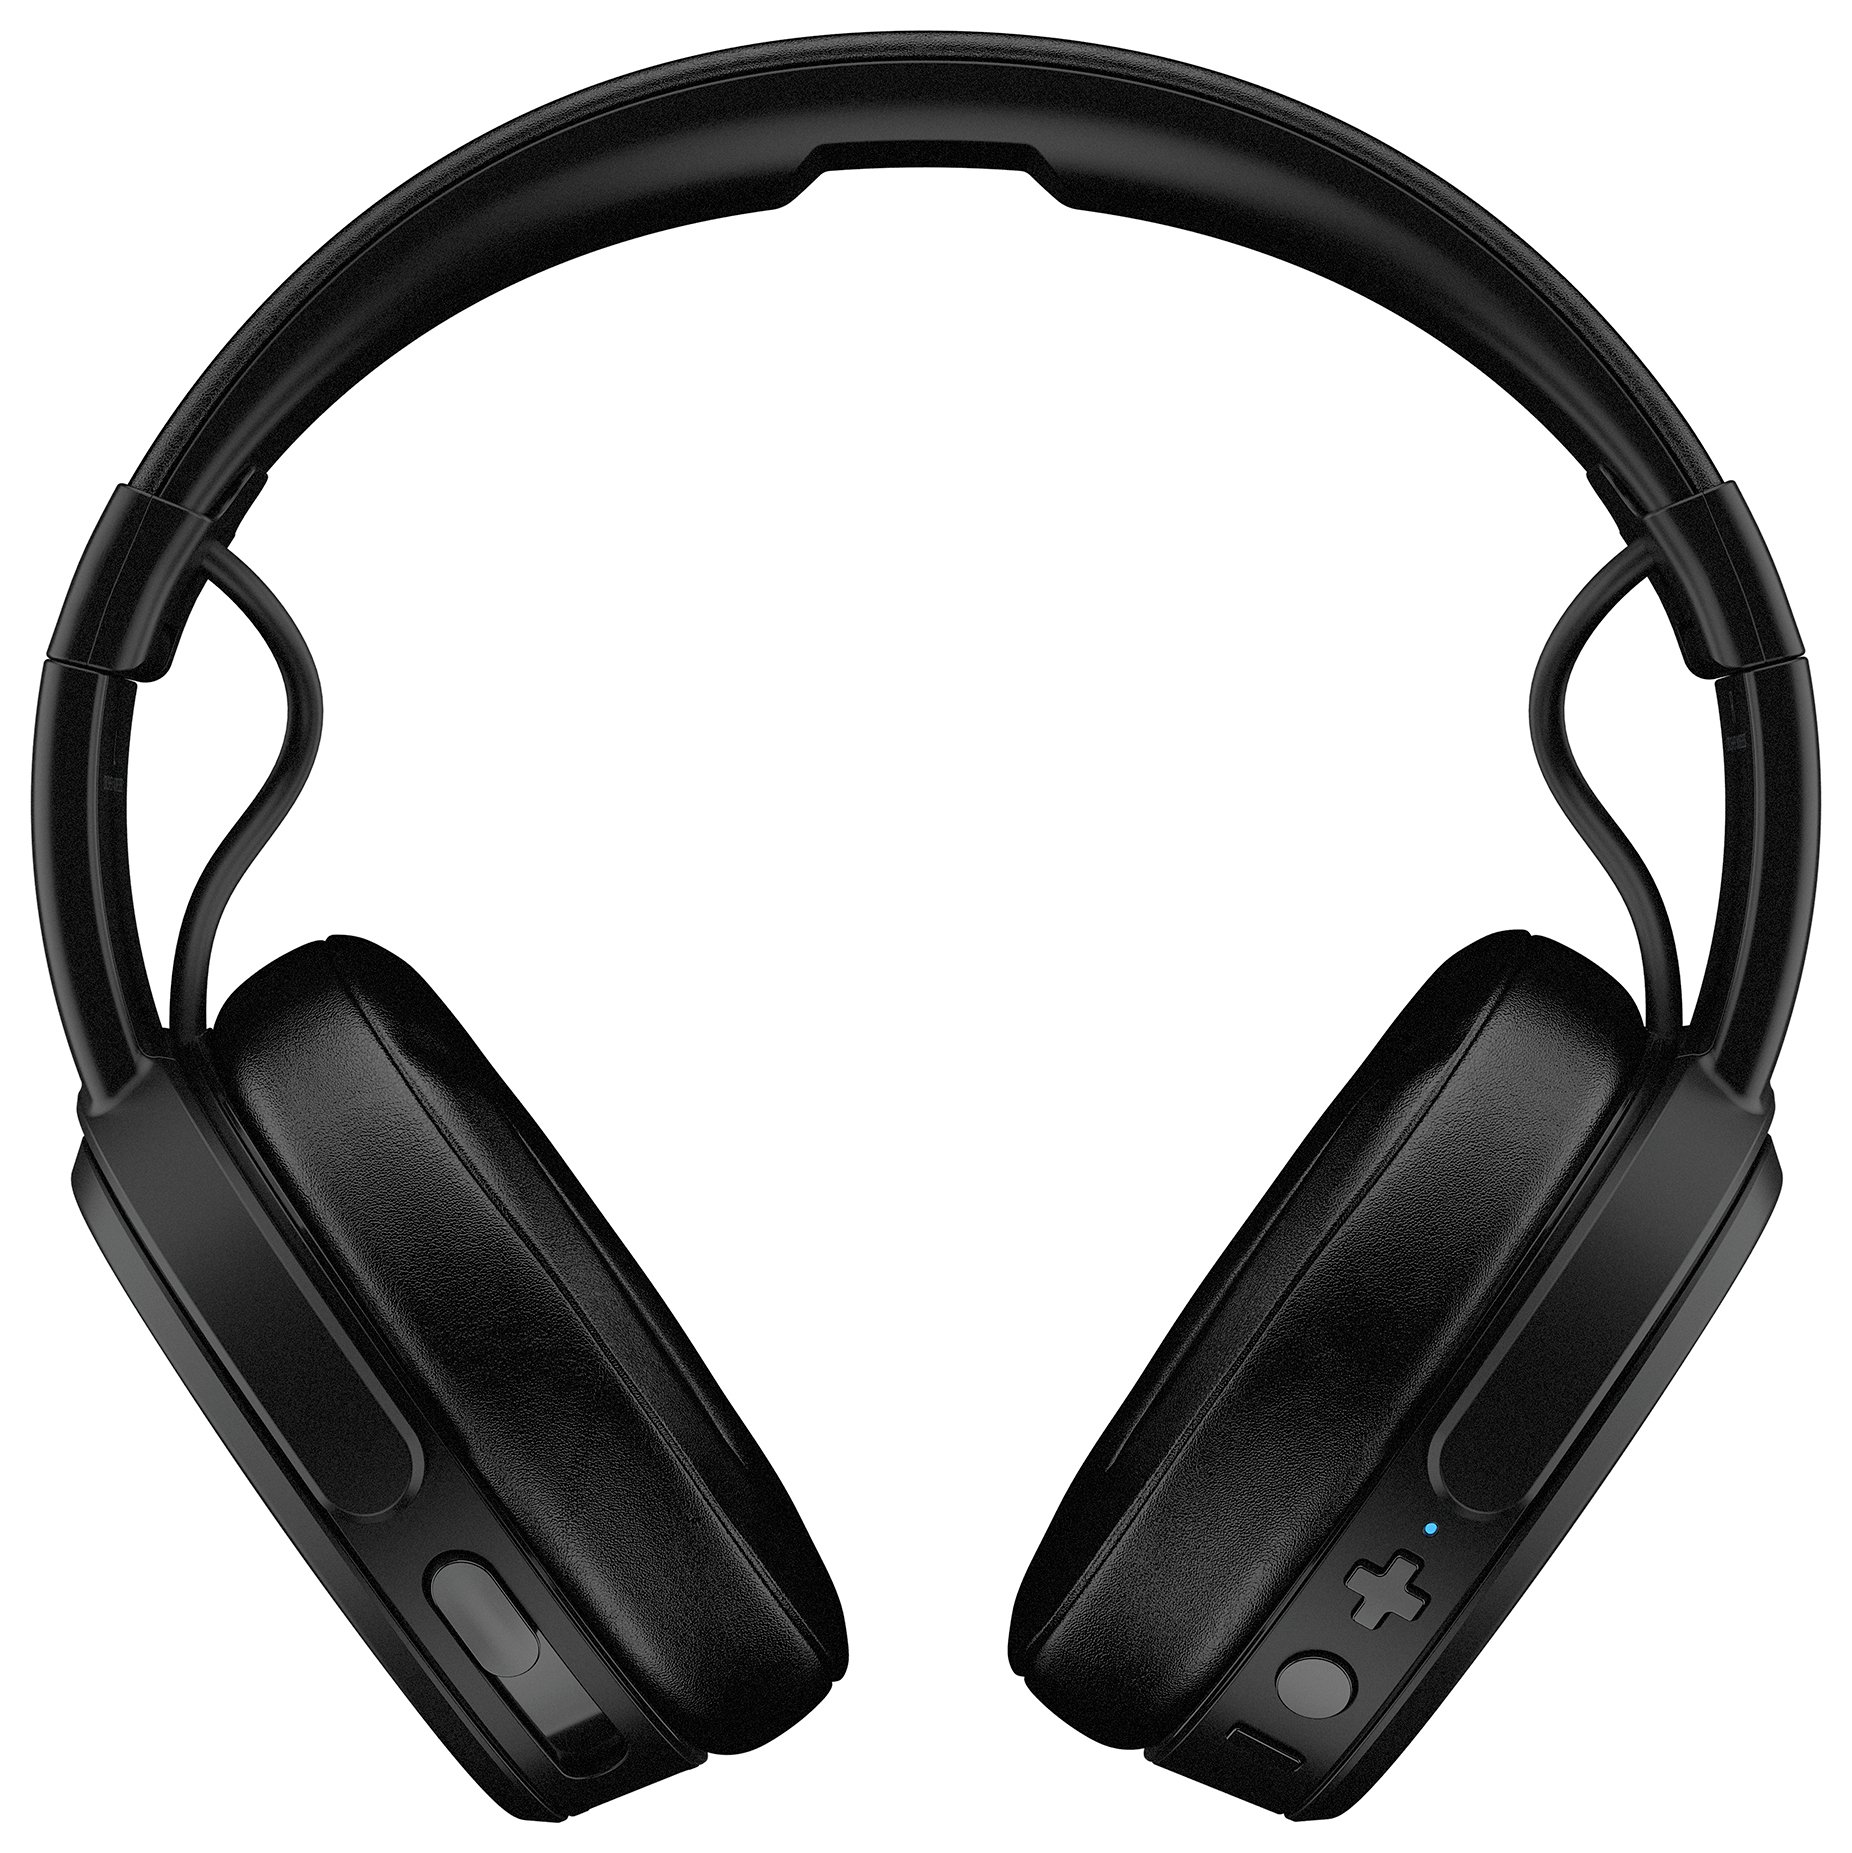 Skullcandy Crusher Wireless Over-Ear Headphones Review